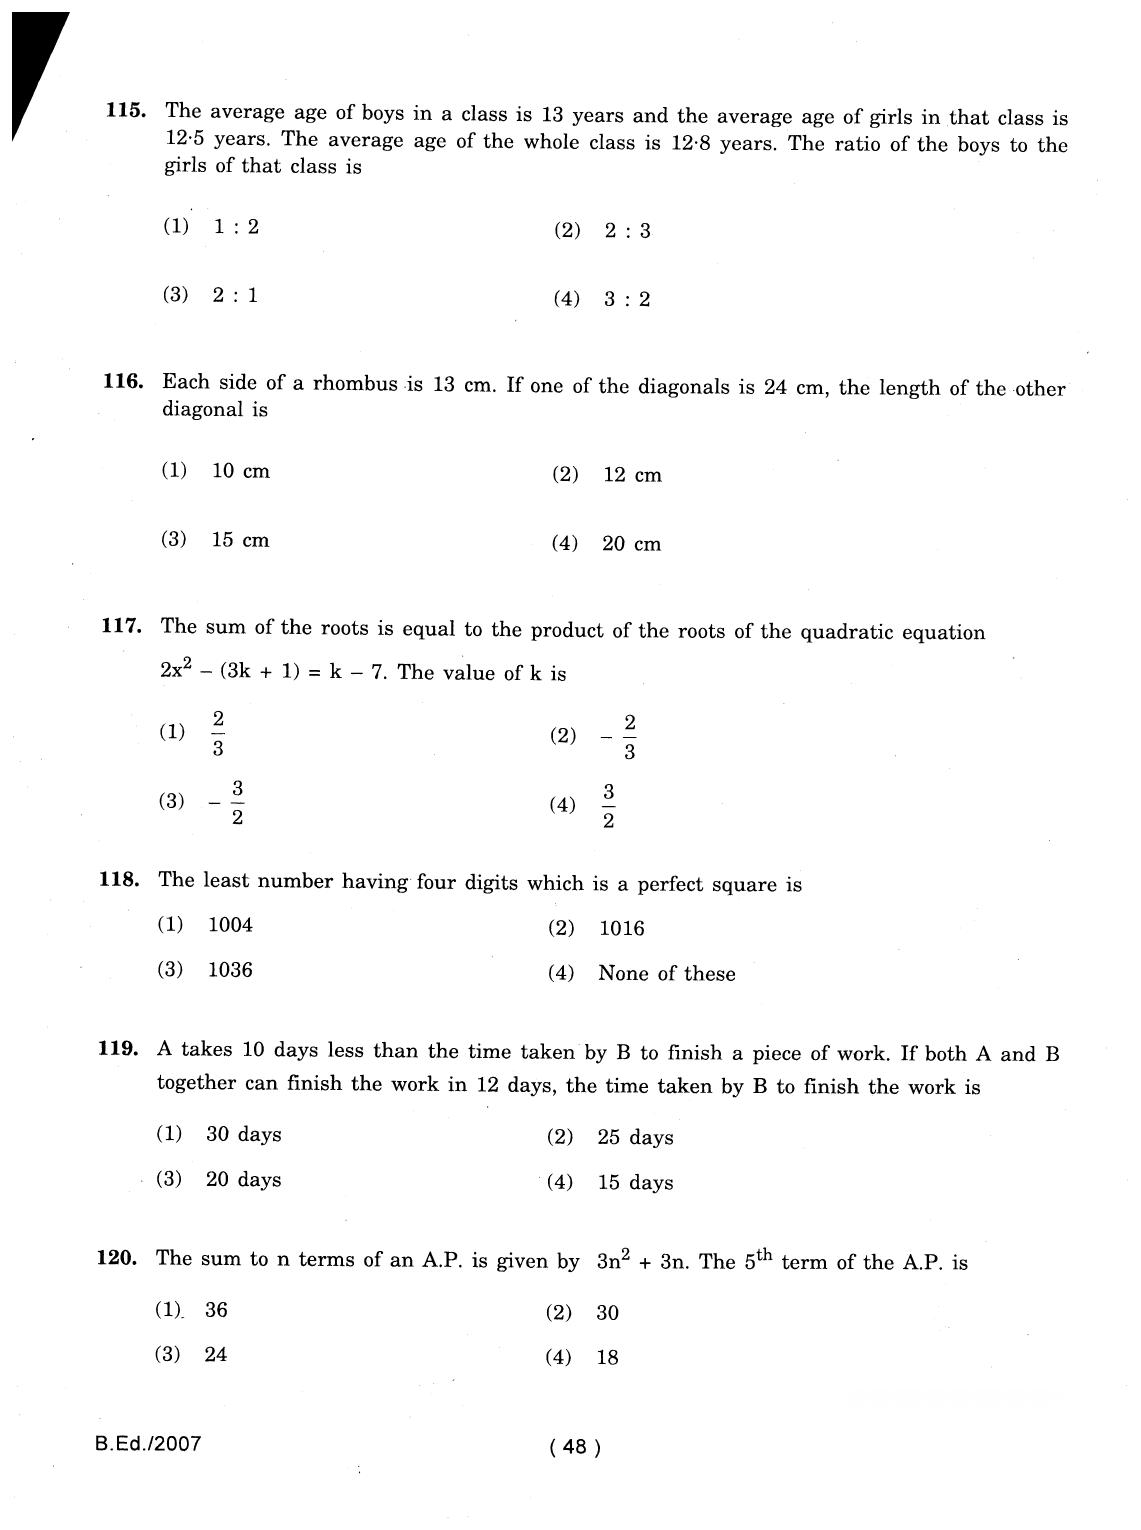 IGNOU B.Ed 2007 Question Paper - Page 48